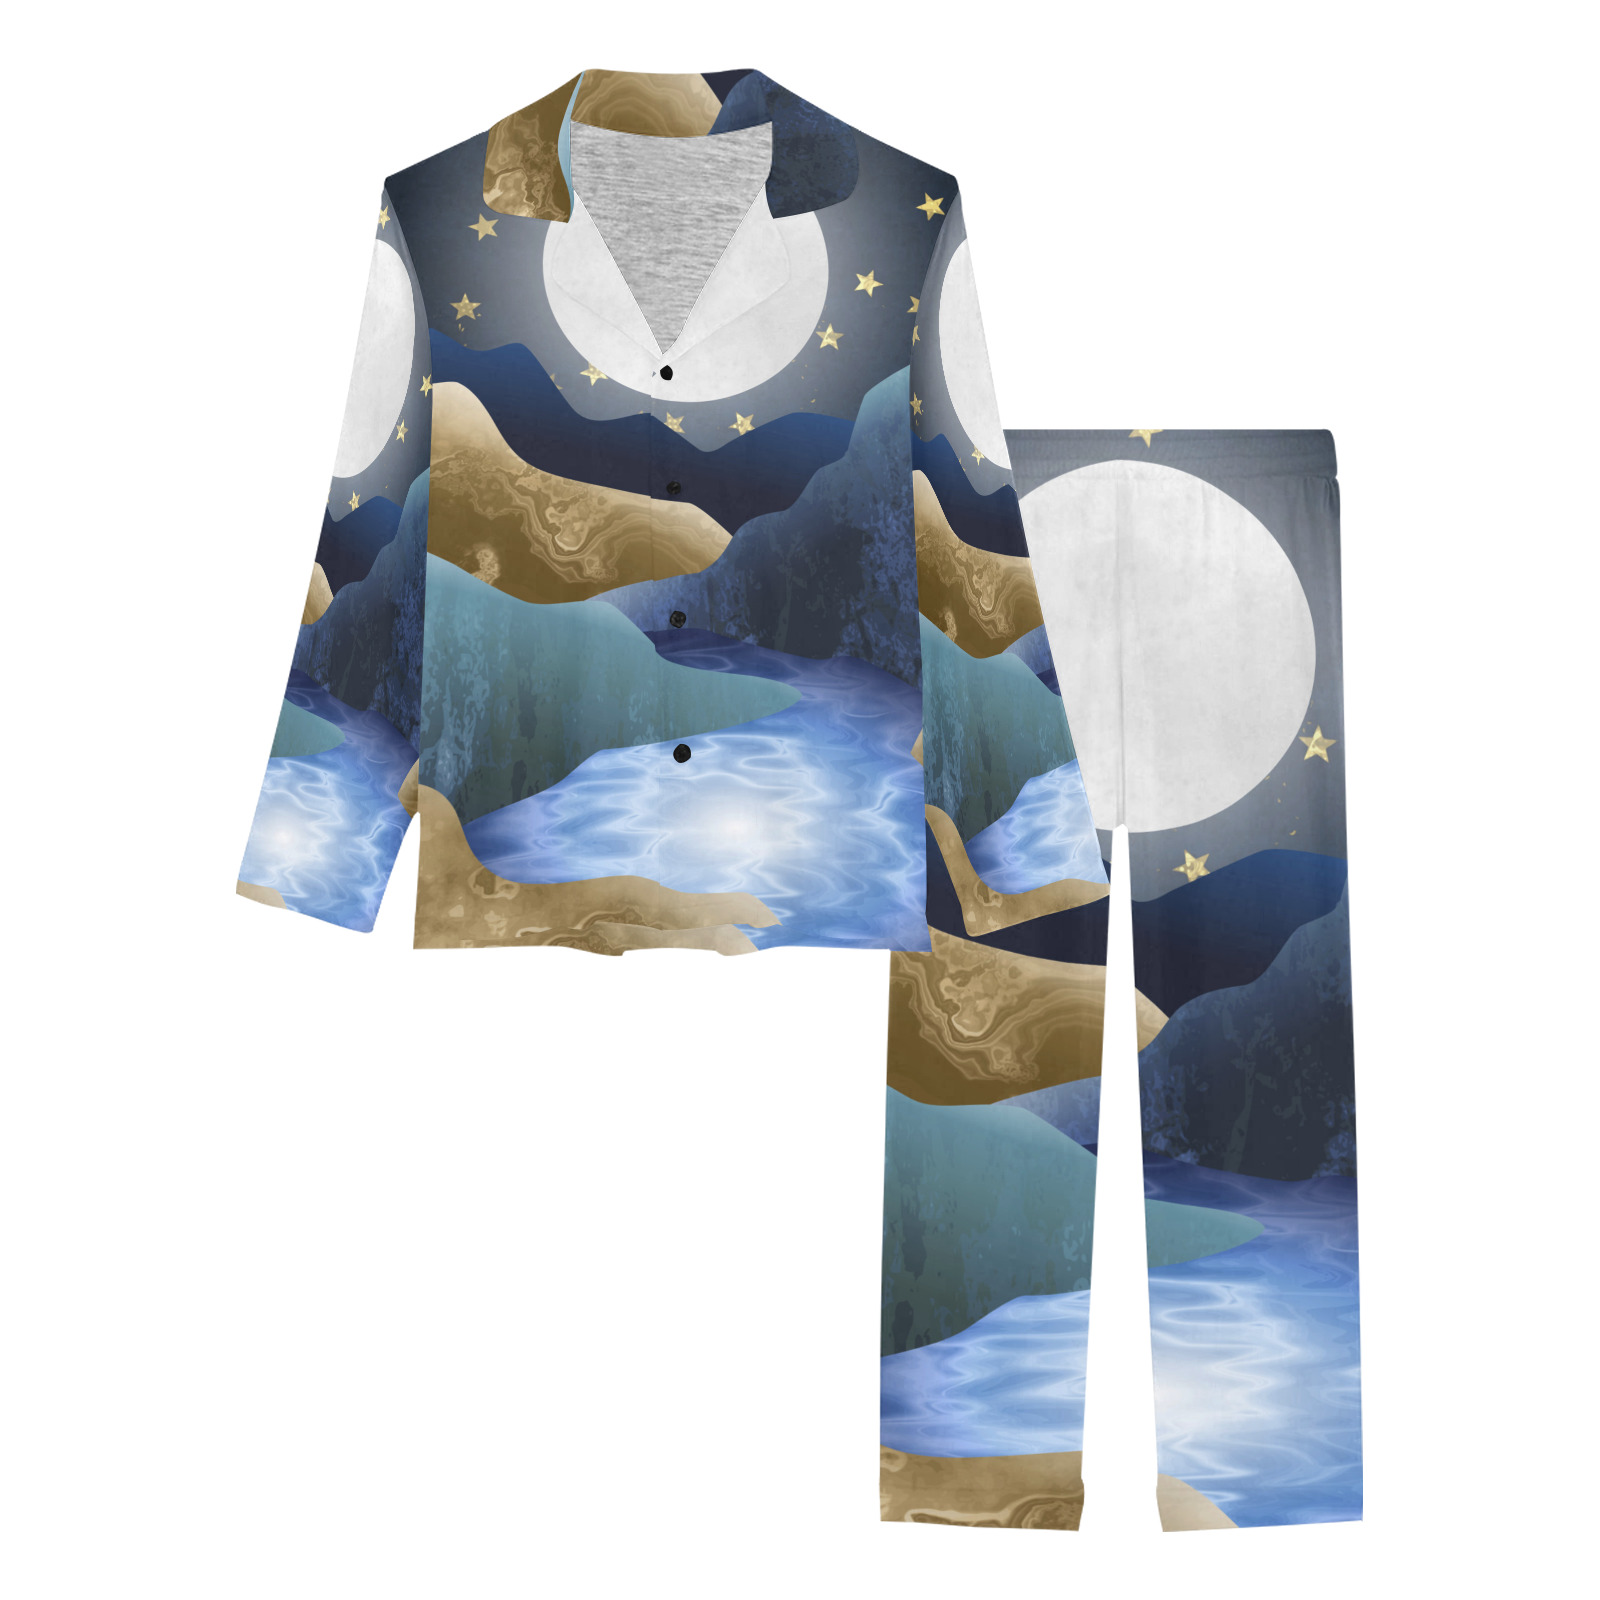 Moonlight Mountain Valley Stream Women's Long Pajama Set